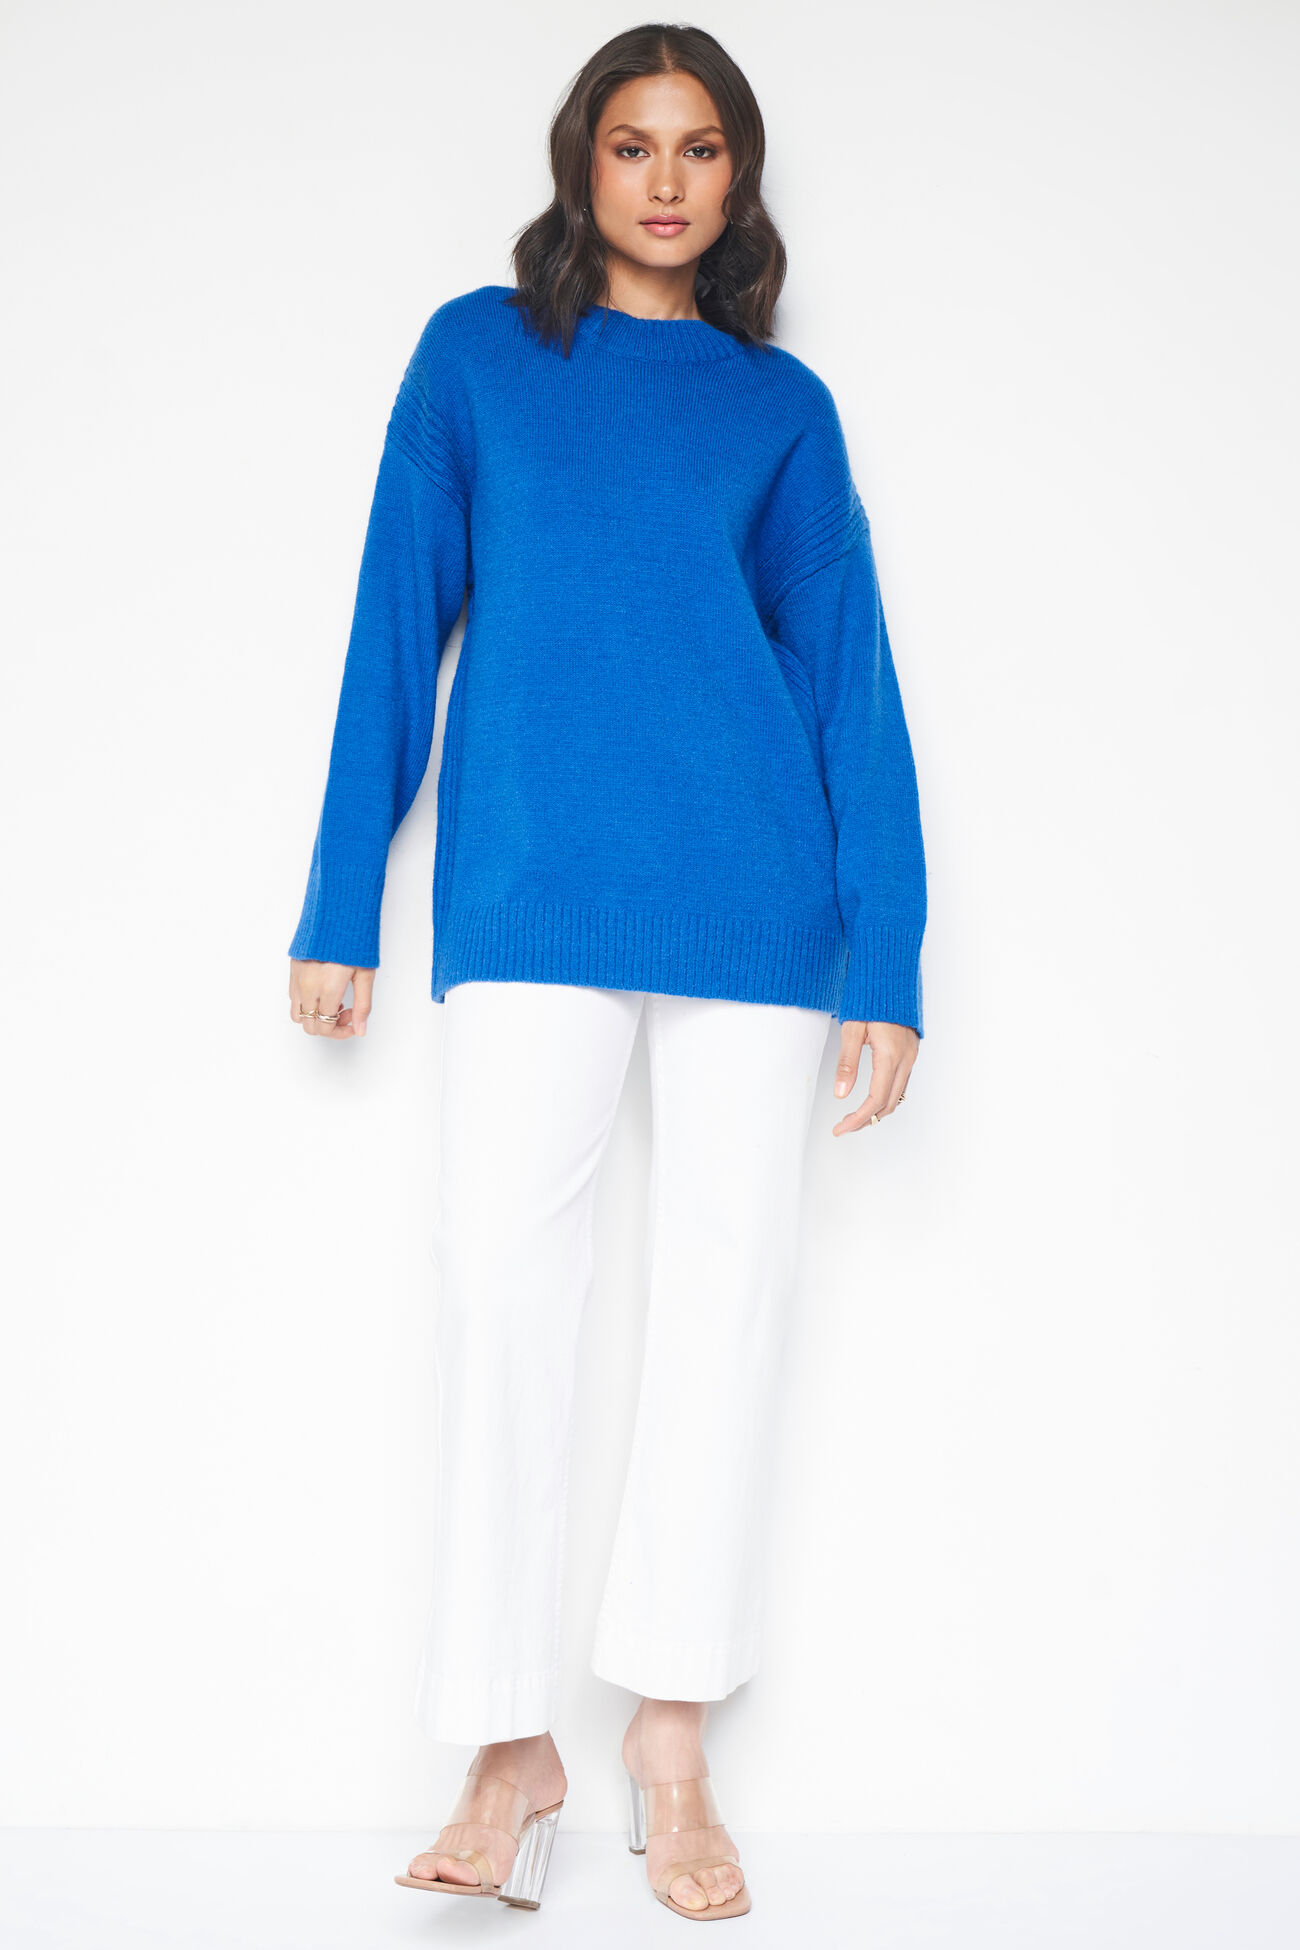 Aspen Over-Sized Sweater, Blue, image 5